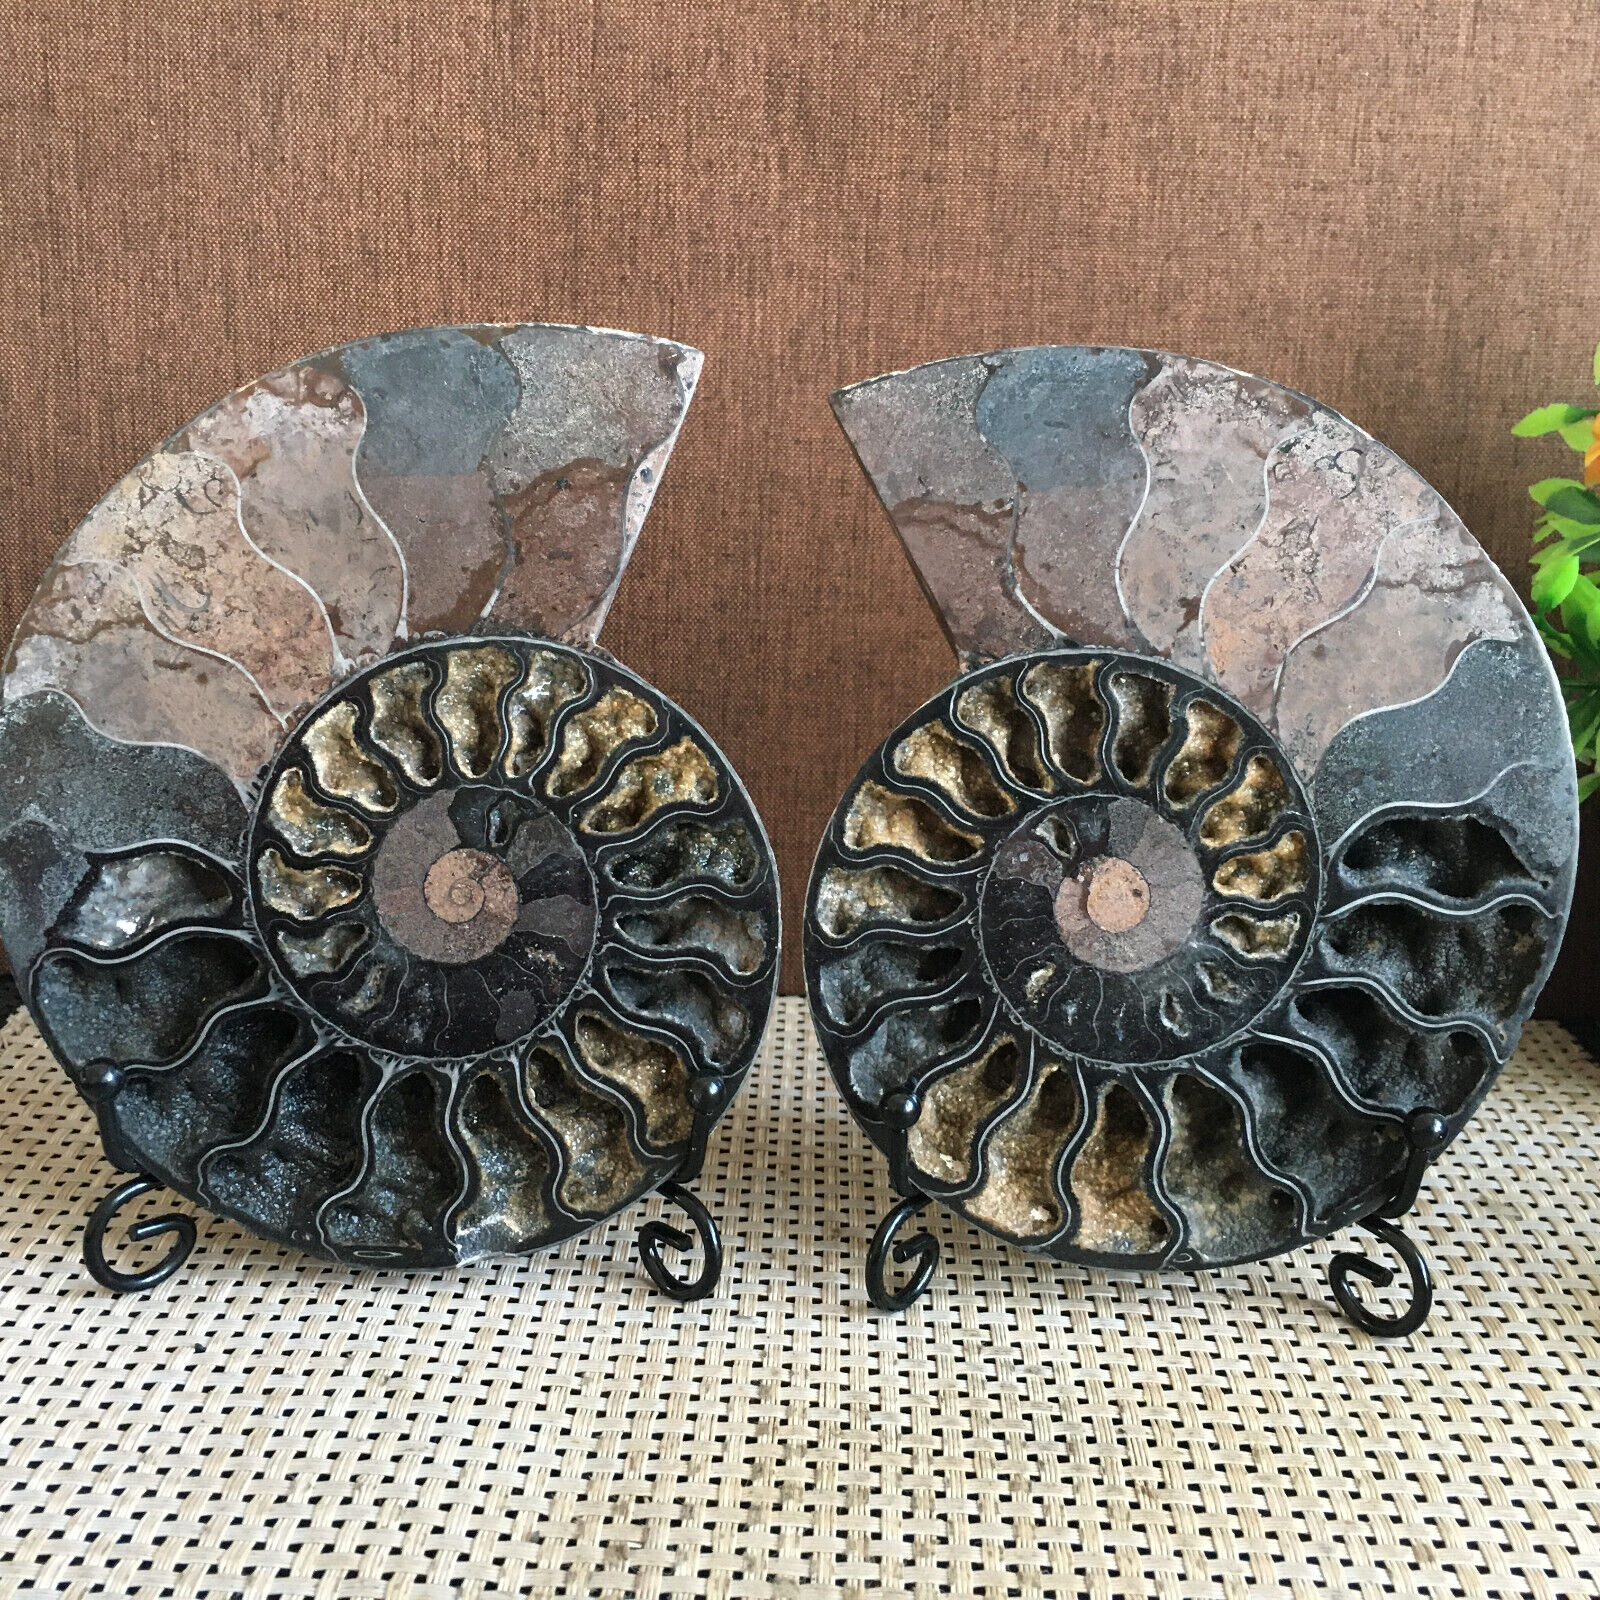 526g 1 pair of Split Black conch Ammonite fossil Specimen Healing Madagascar B11